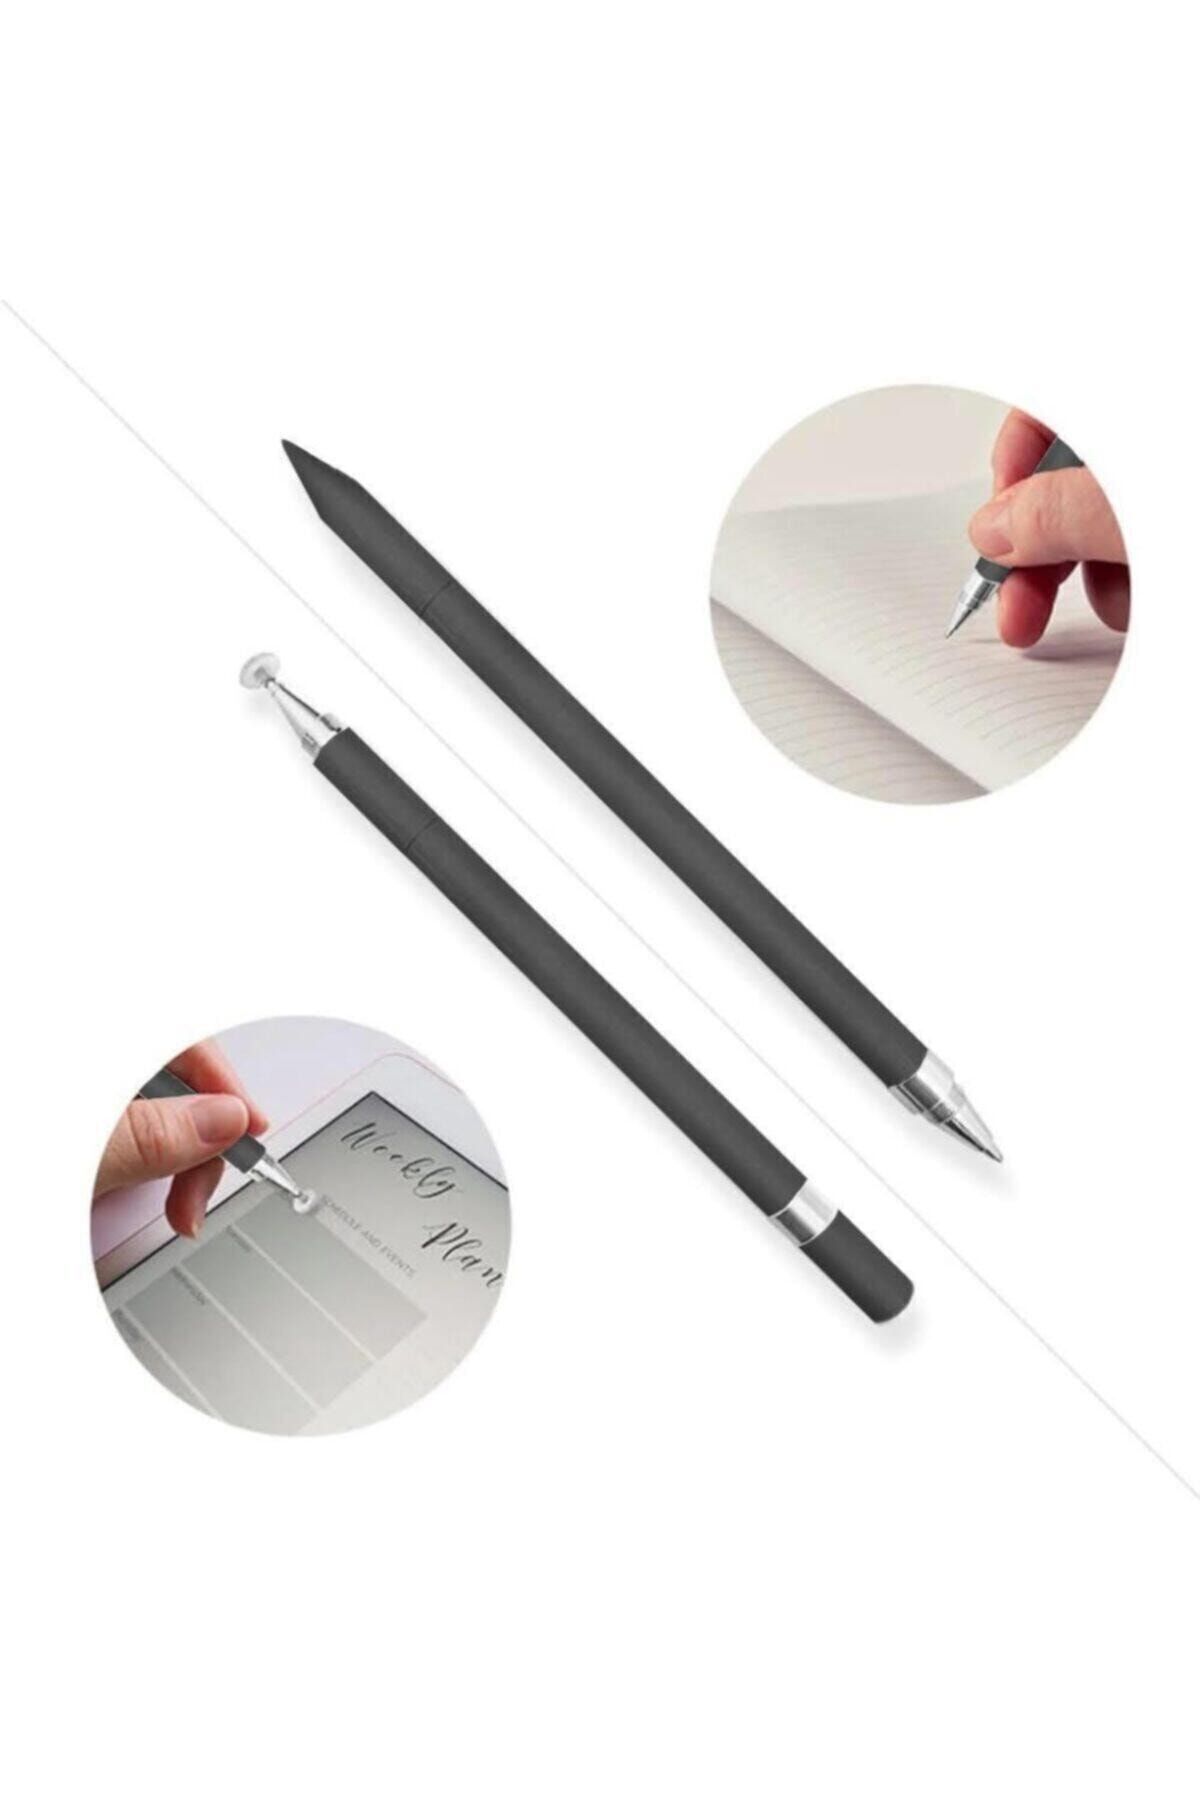 TEKNETSTORE Dokunmatik Kalem Passive 2 In 1 Tablet Kalemi Çizim & Yazı Kalemi Dokunmatik Kalem